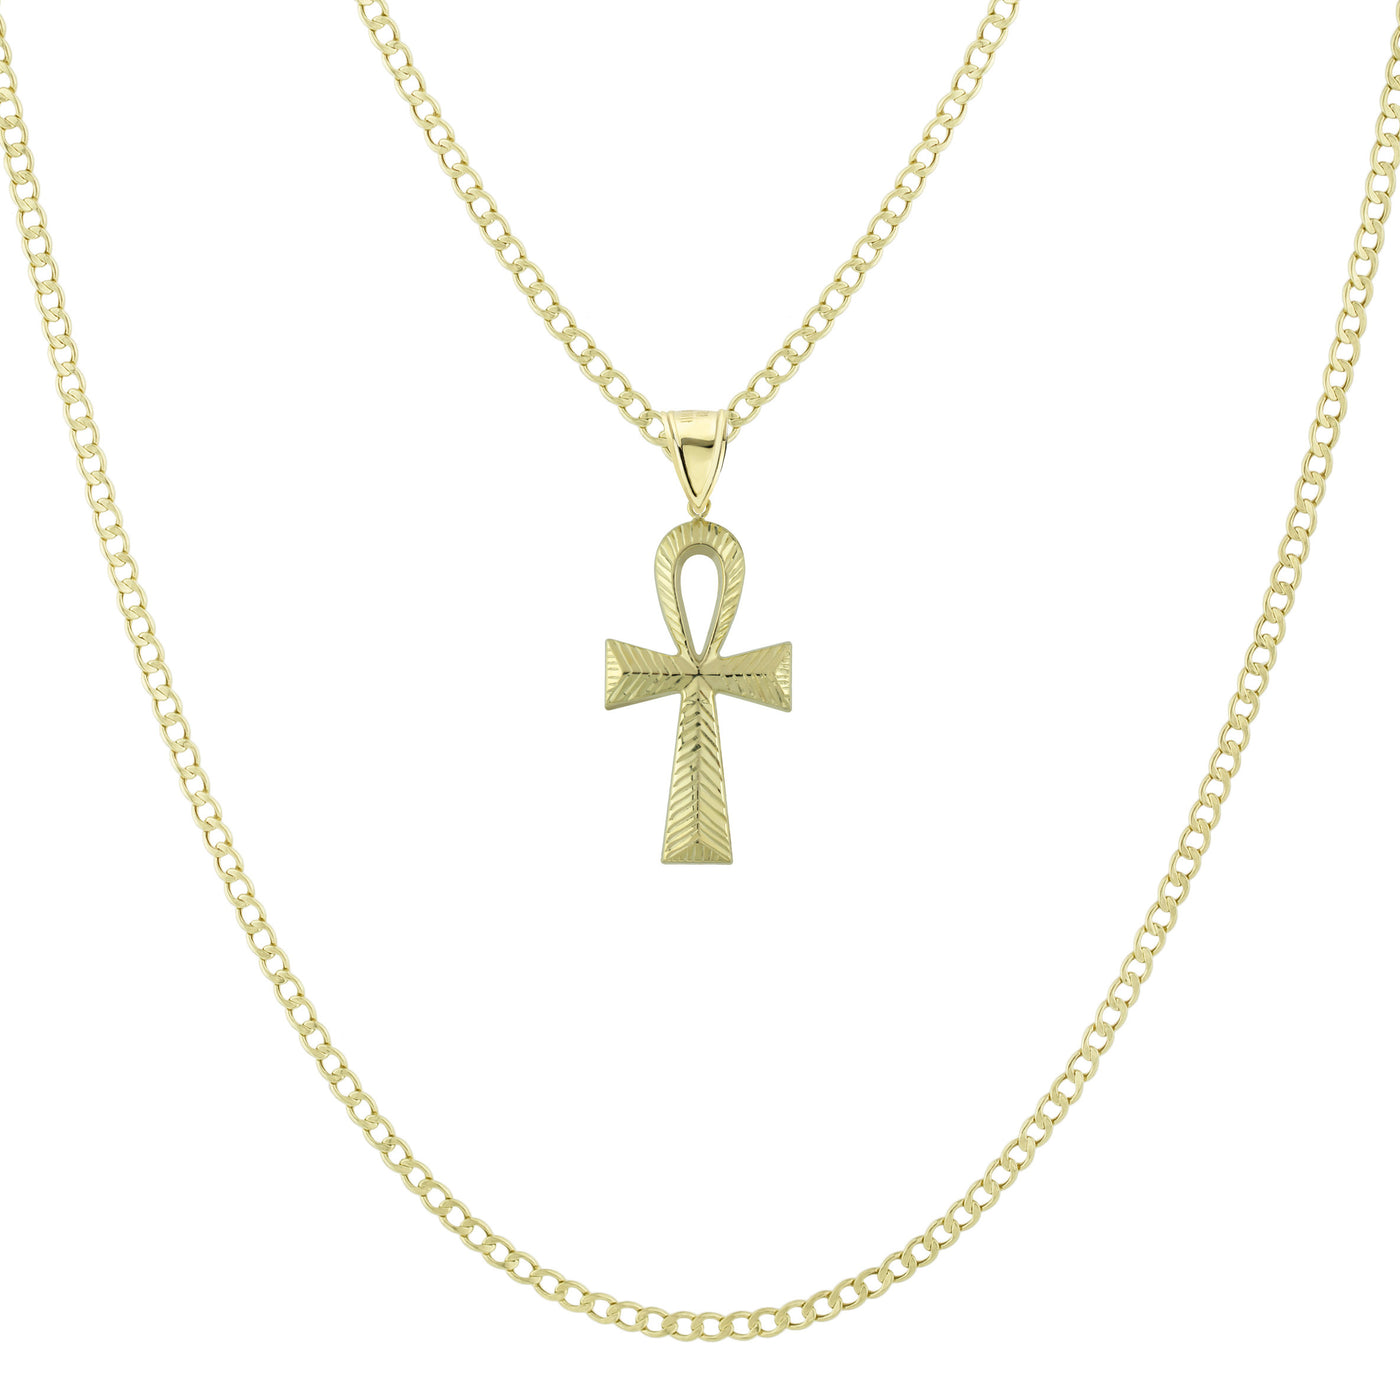 1 1/2" Diamond Cut Ankh Cross Pendant & Chain Necklace Set 14K Yellow Gold